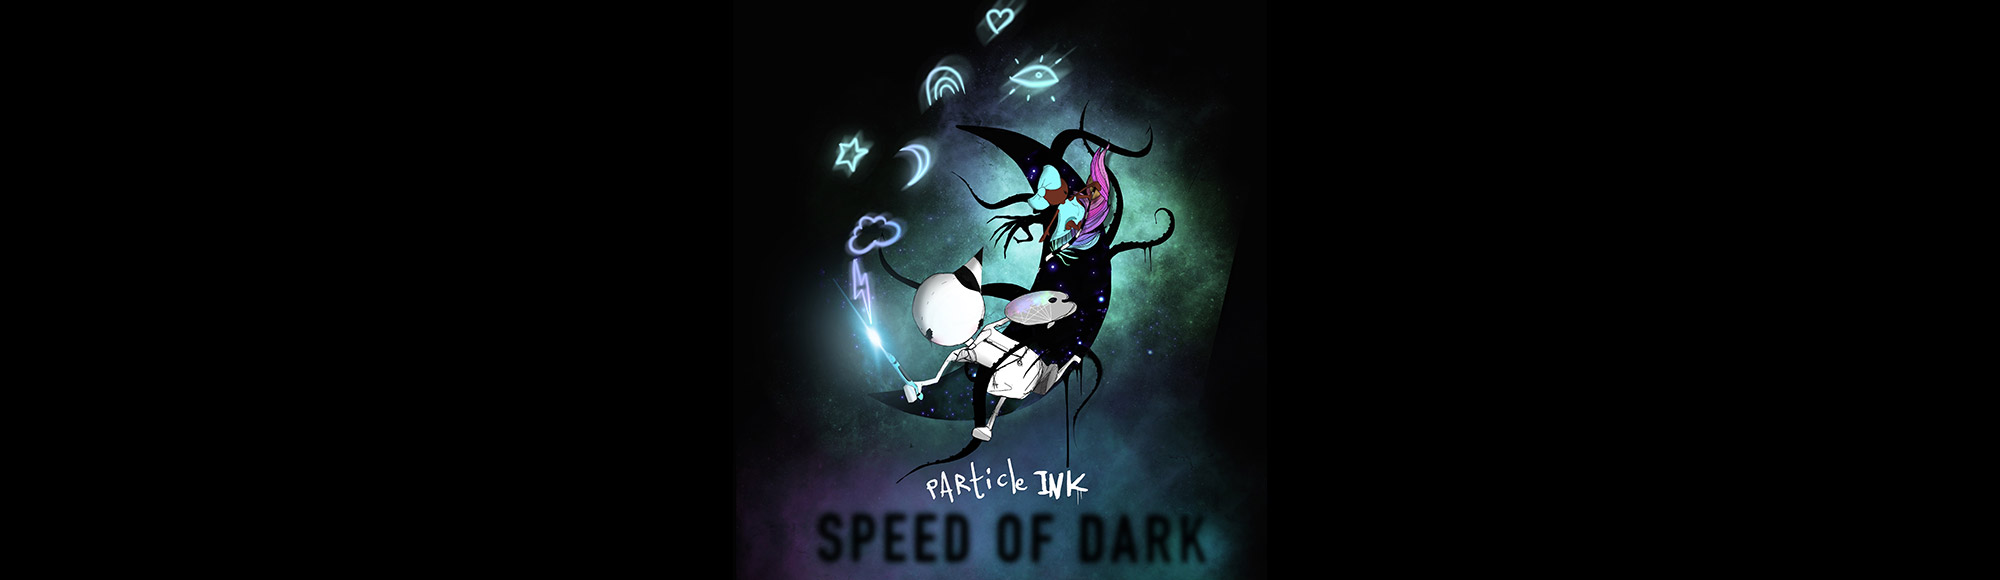 Particle Ink: Speed of Dark show